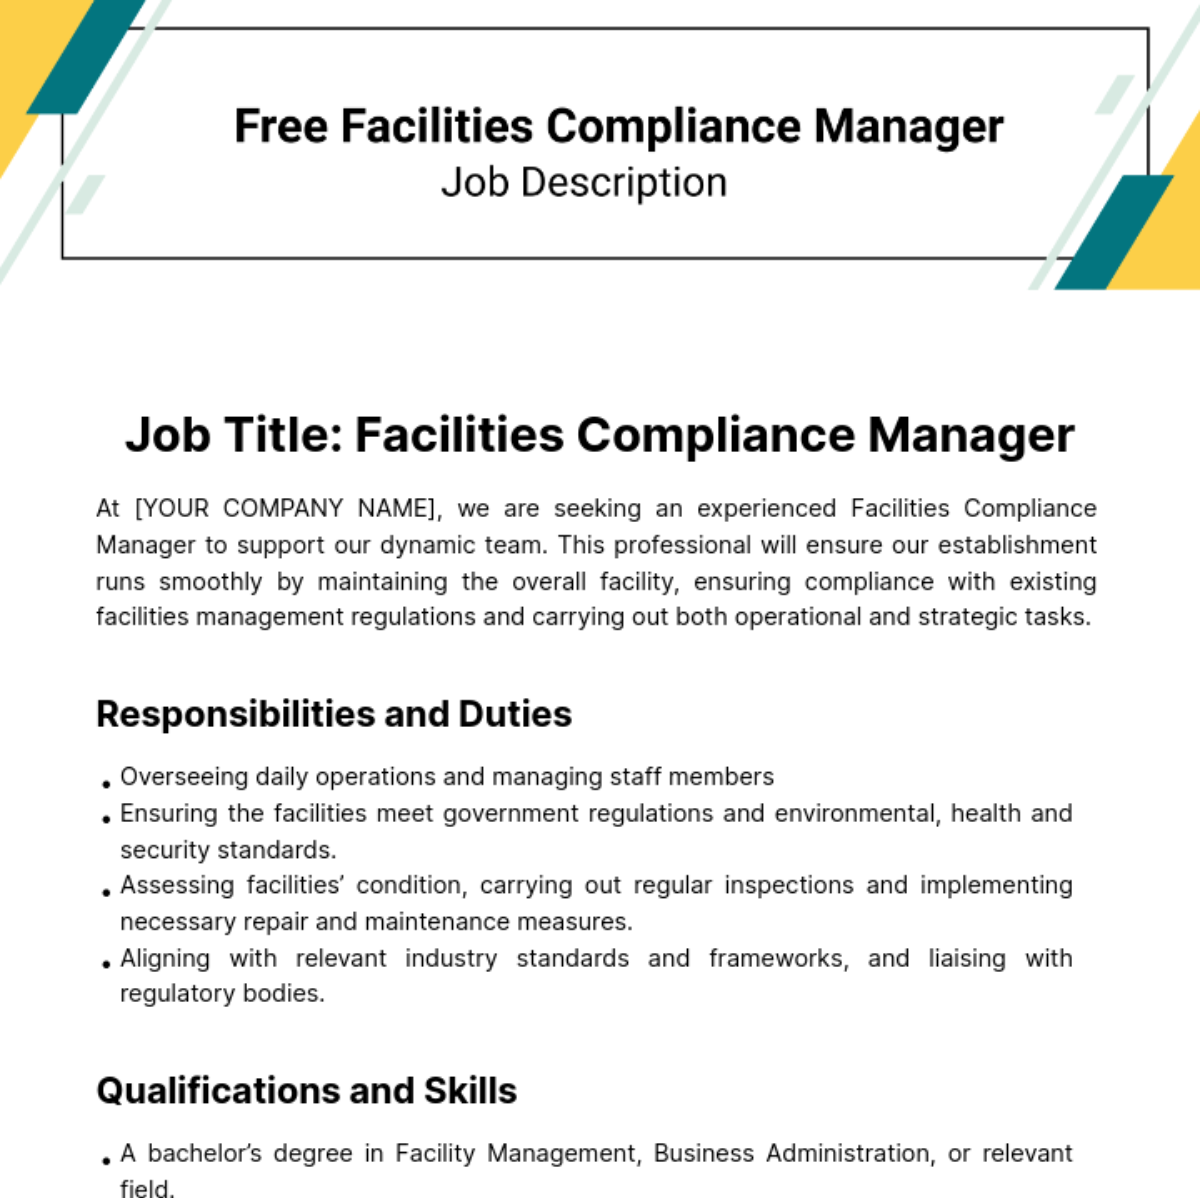 Free Facilities Compliance Manager Job Description Template